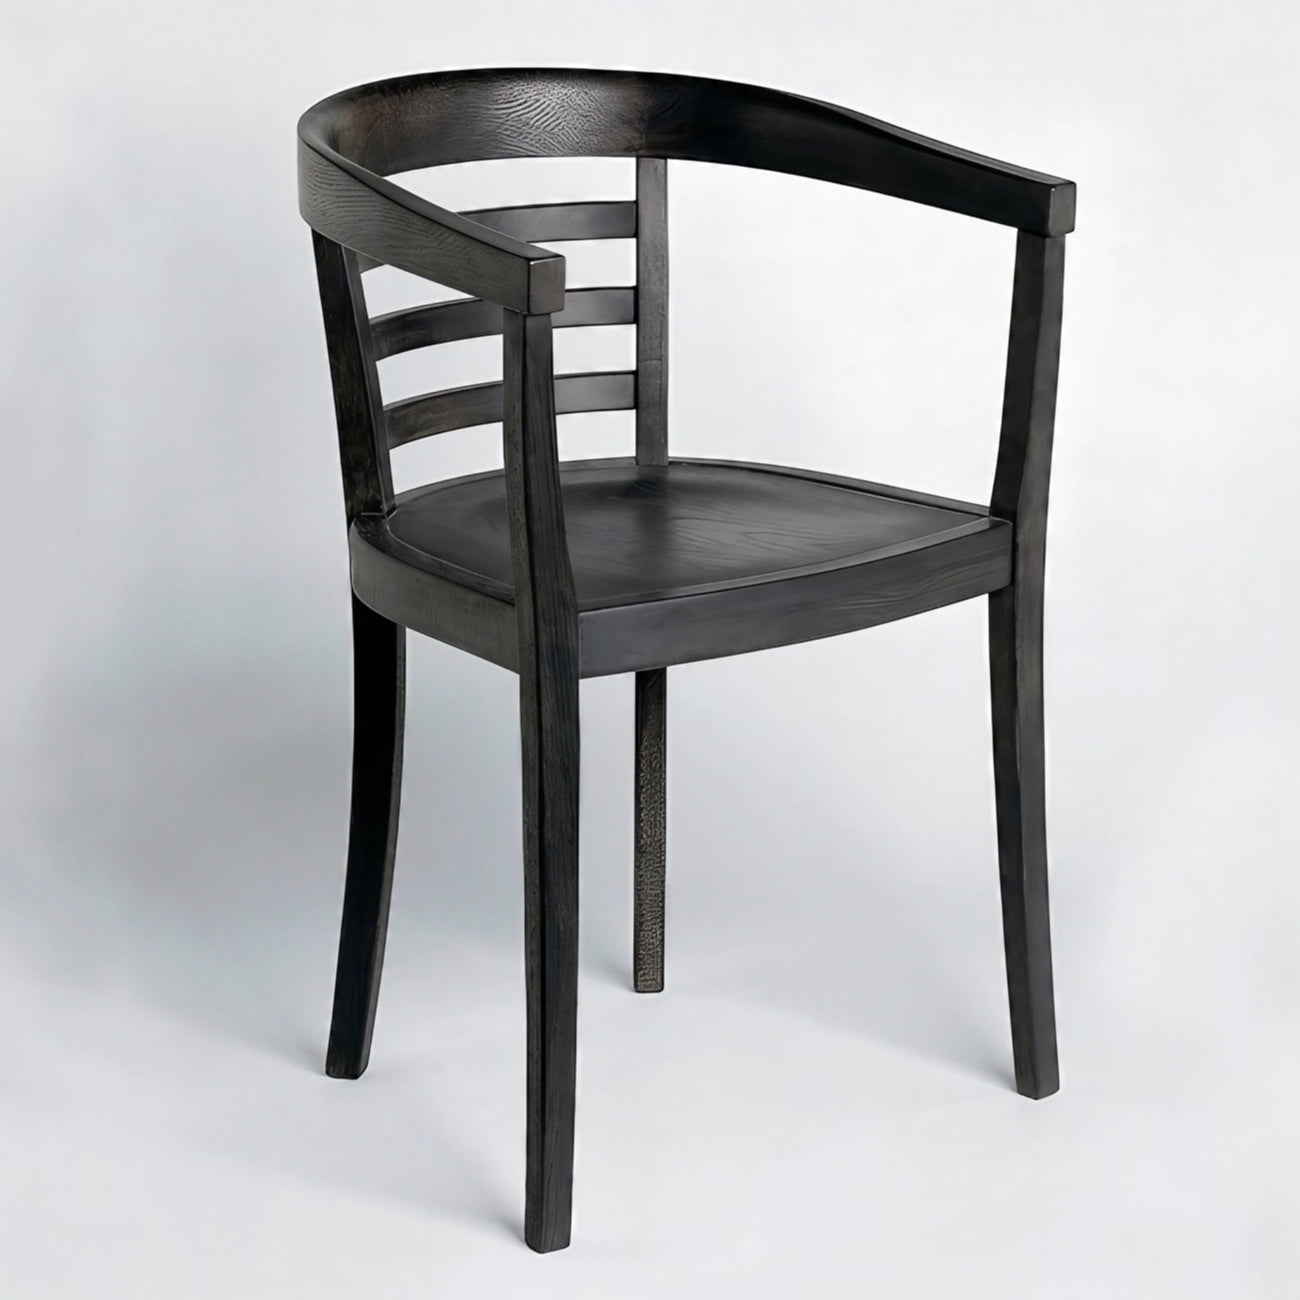 JULIUS BLACK chair by Lambert